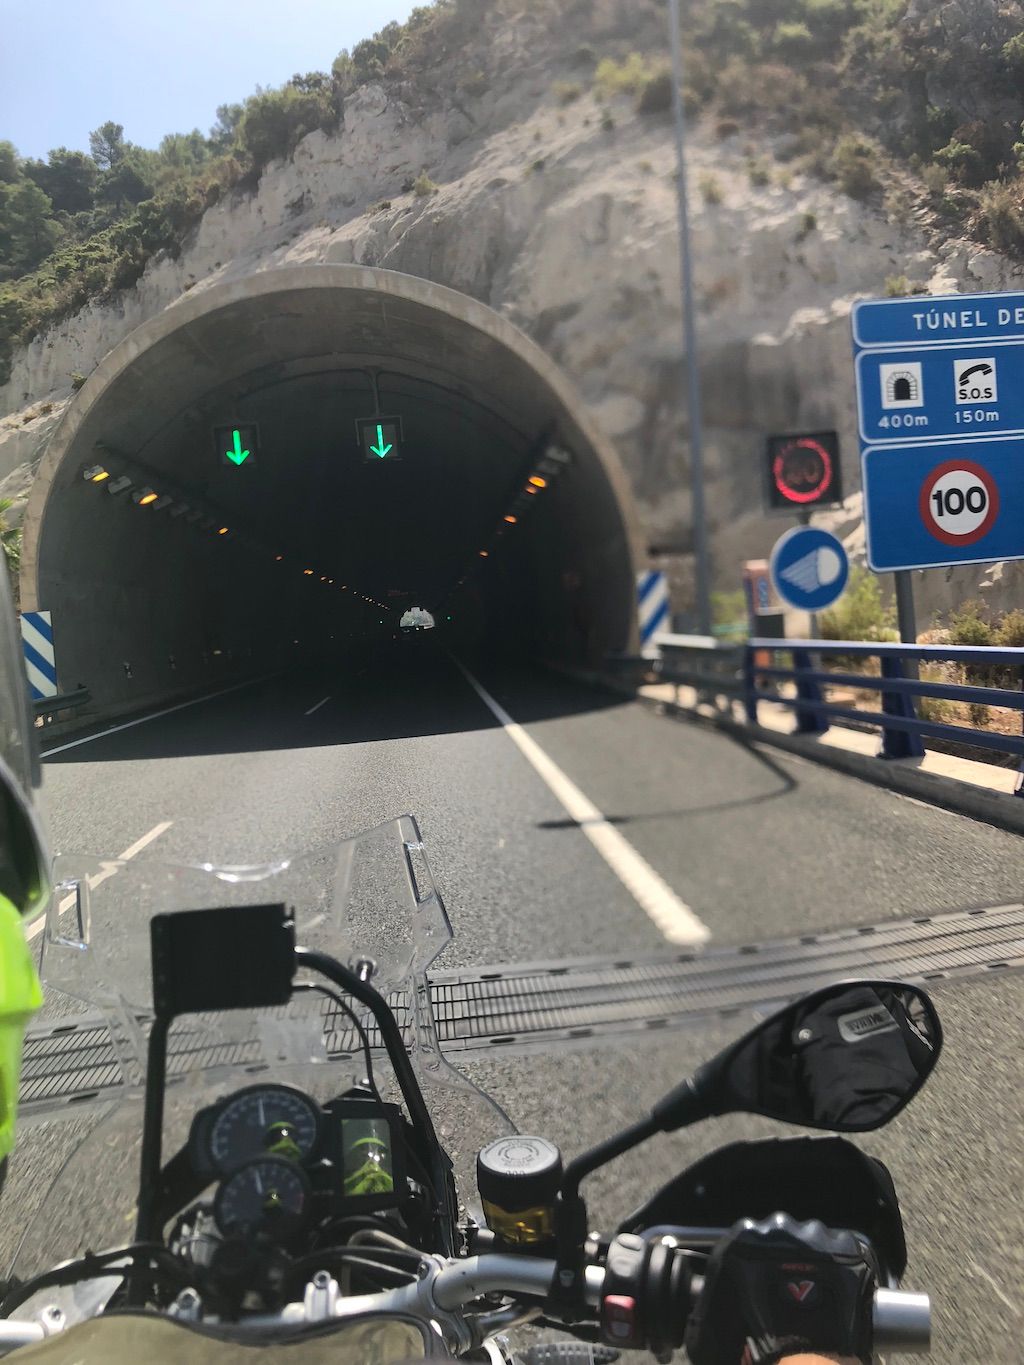 Байкал-Гибралтар: на мотоцикле от Сибири до океана. Часть 4. Дорога домой.